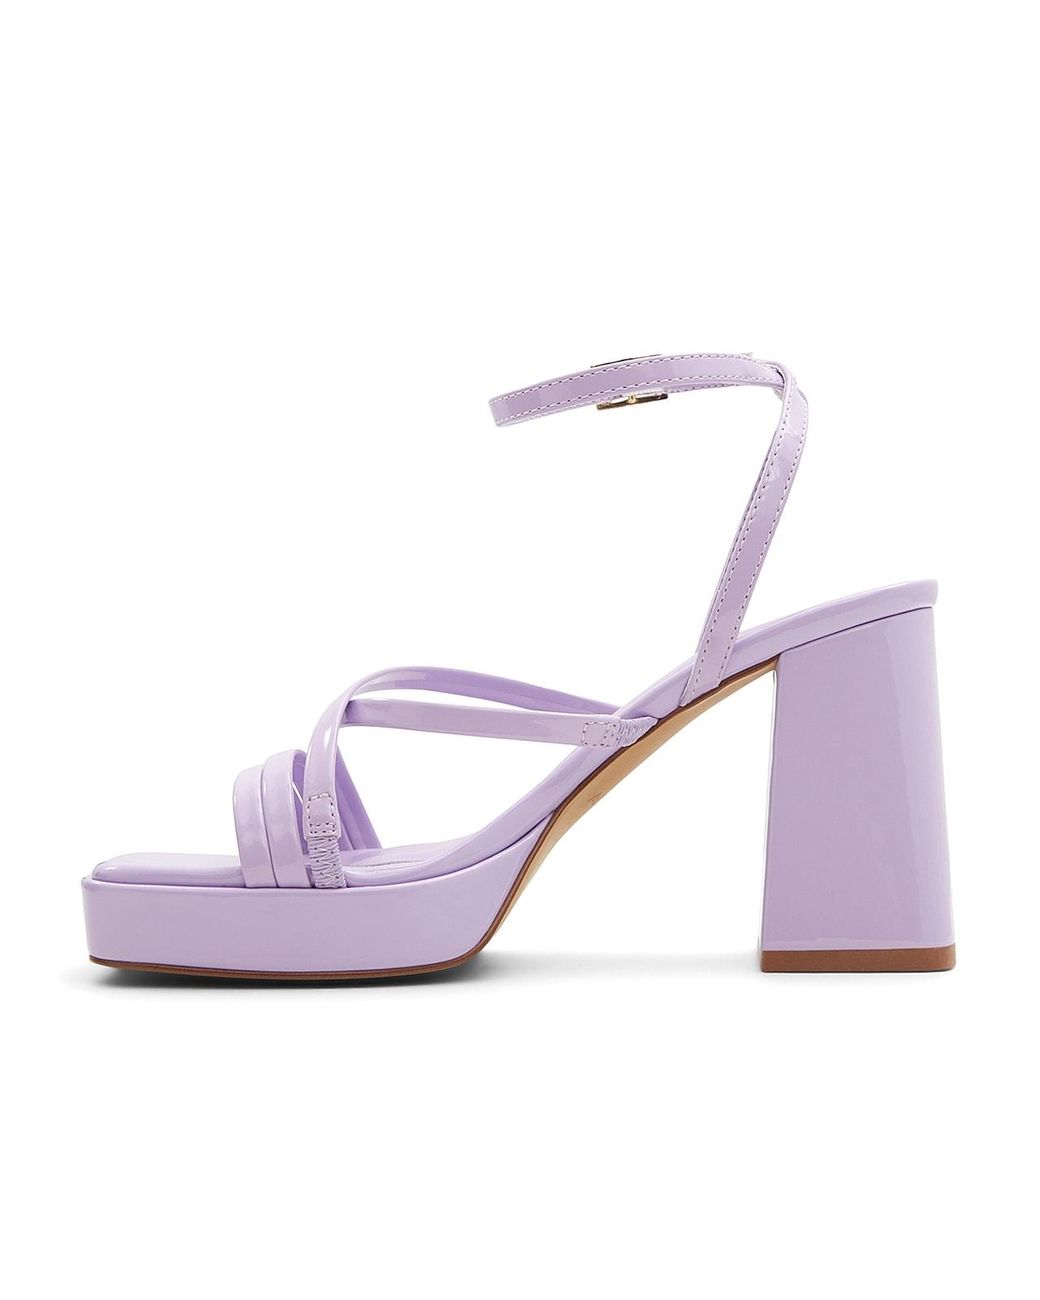 ALDO Taia Platform Sandal in Purple | Lyst